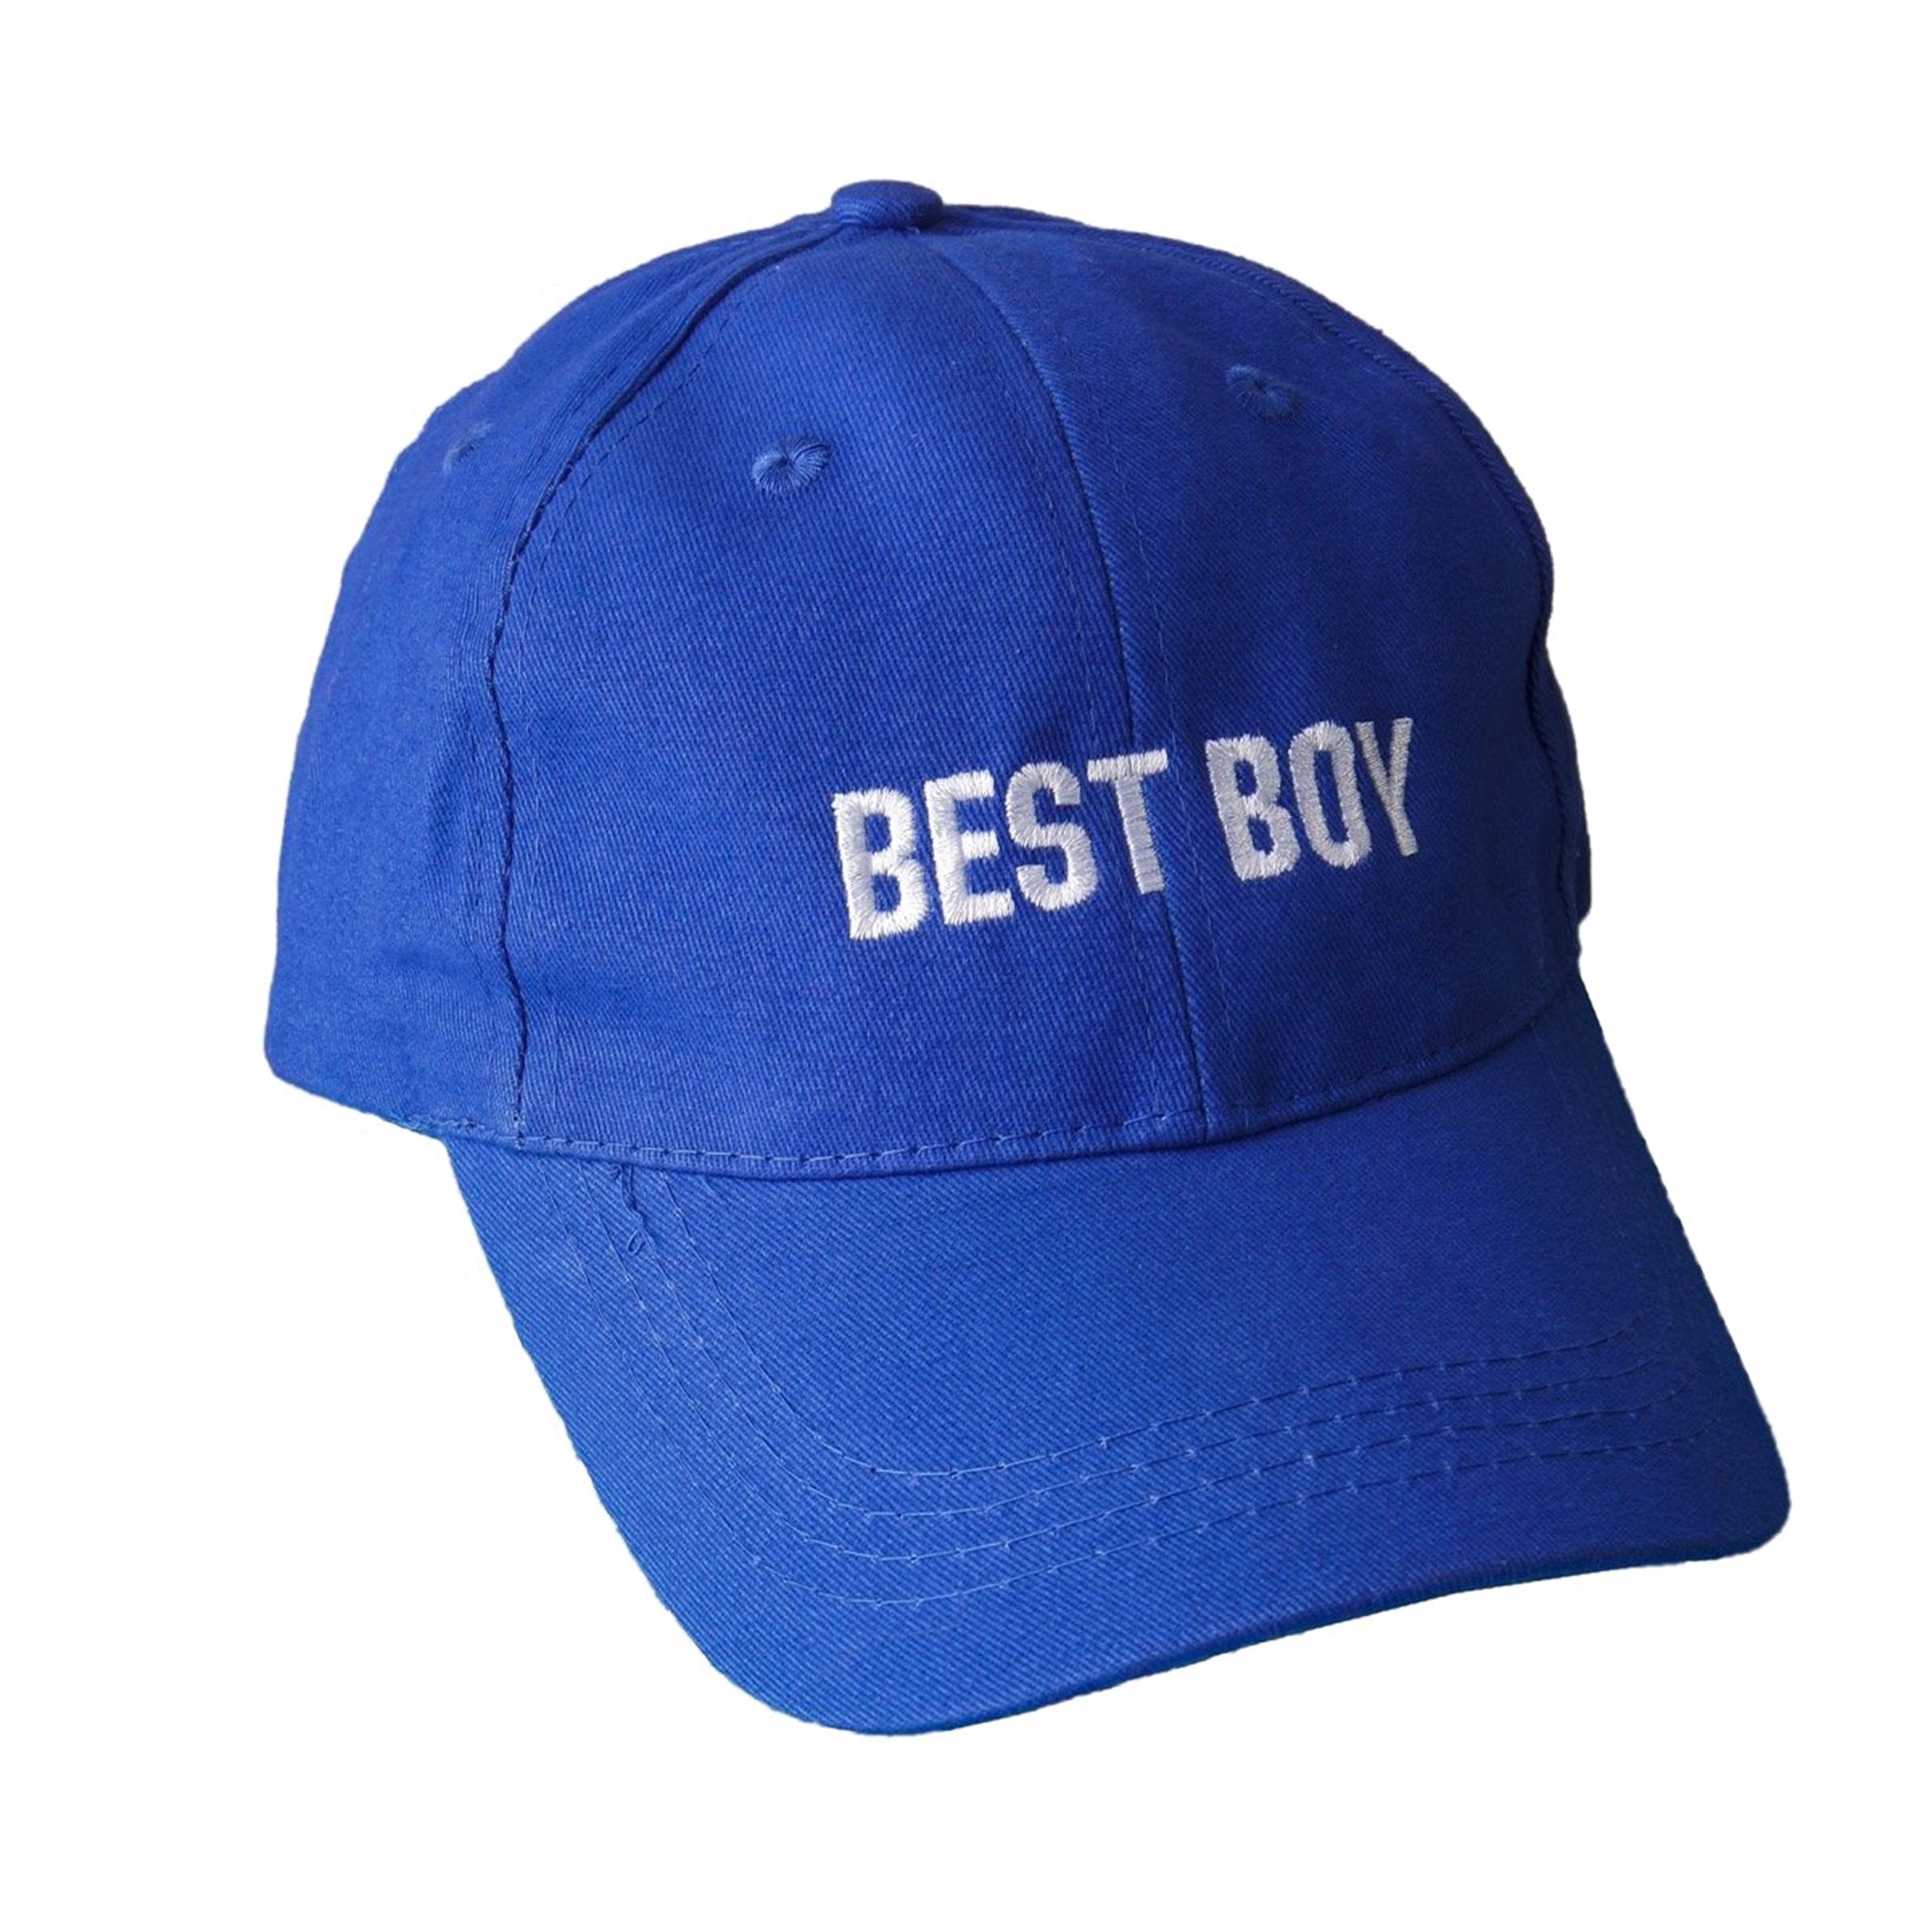 Best Boy Embroidered Film Role Baseball Cap - Destination PSP